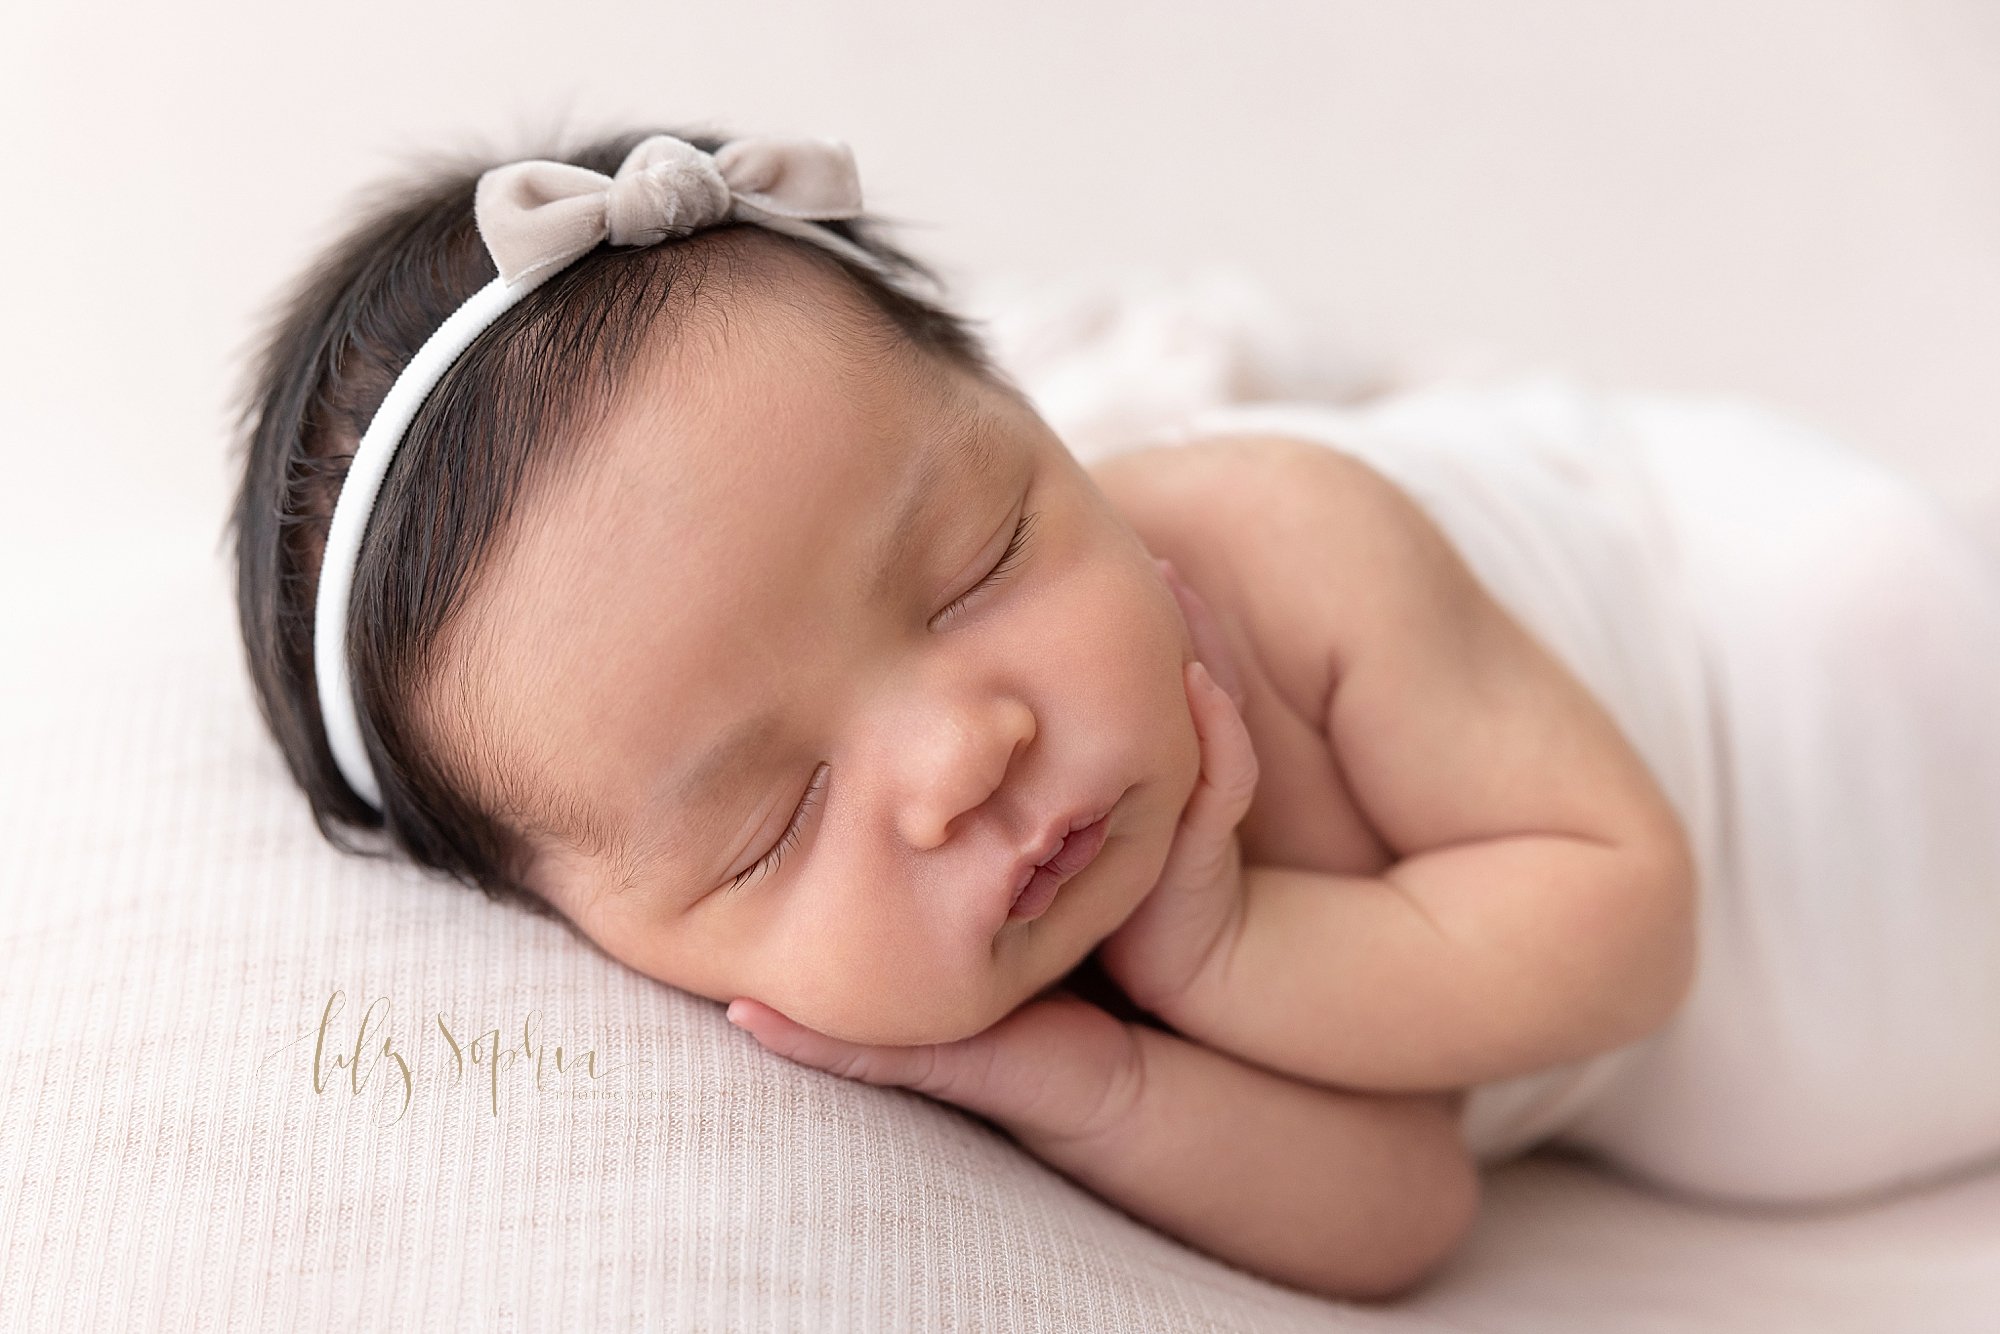 intown-atlanta-decatur-buckhead-studio-newborn-baby-girl-pictures-family-photoshoot_3115.jpg